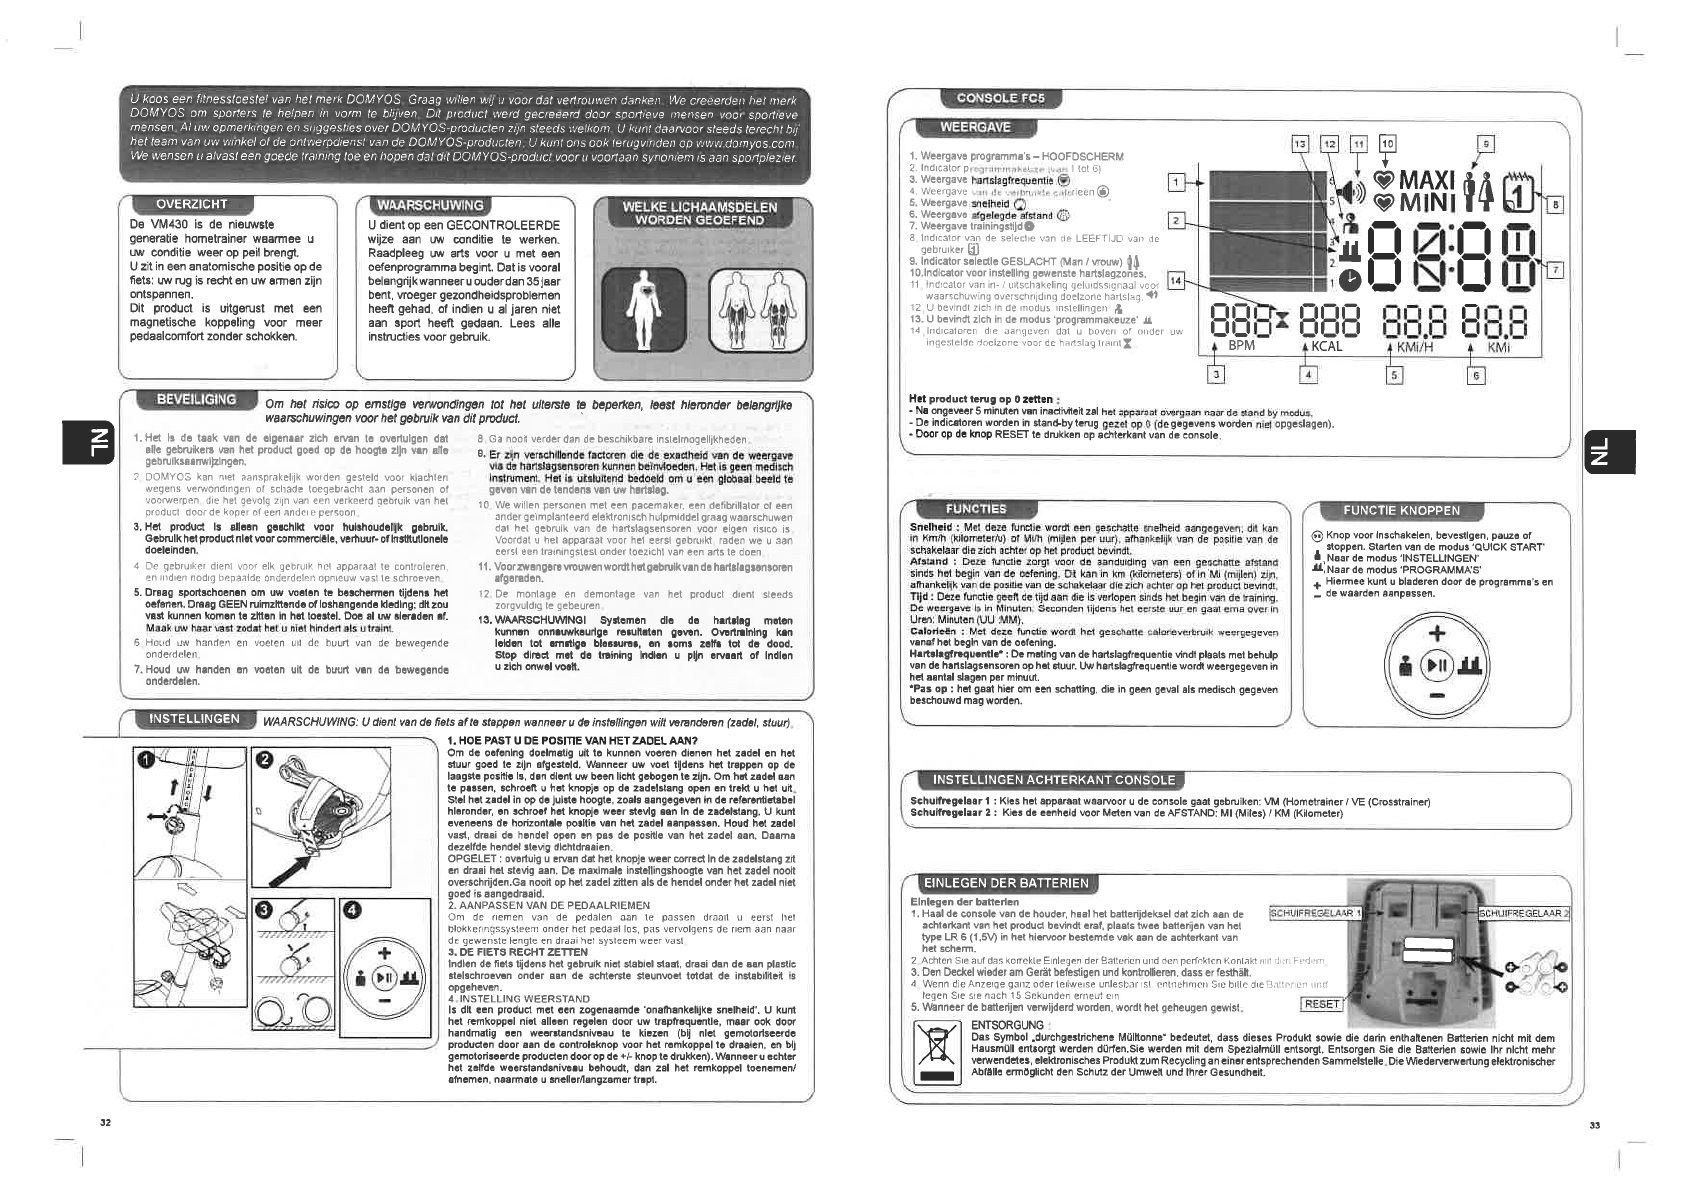 Manual Domyos VM 430 (page 8 of 9 